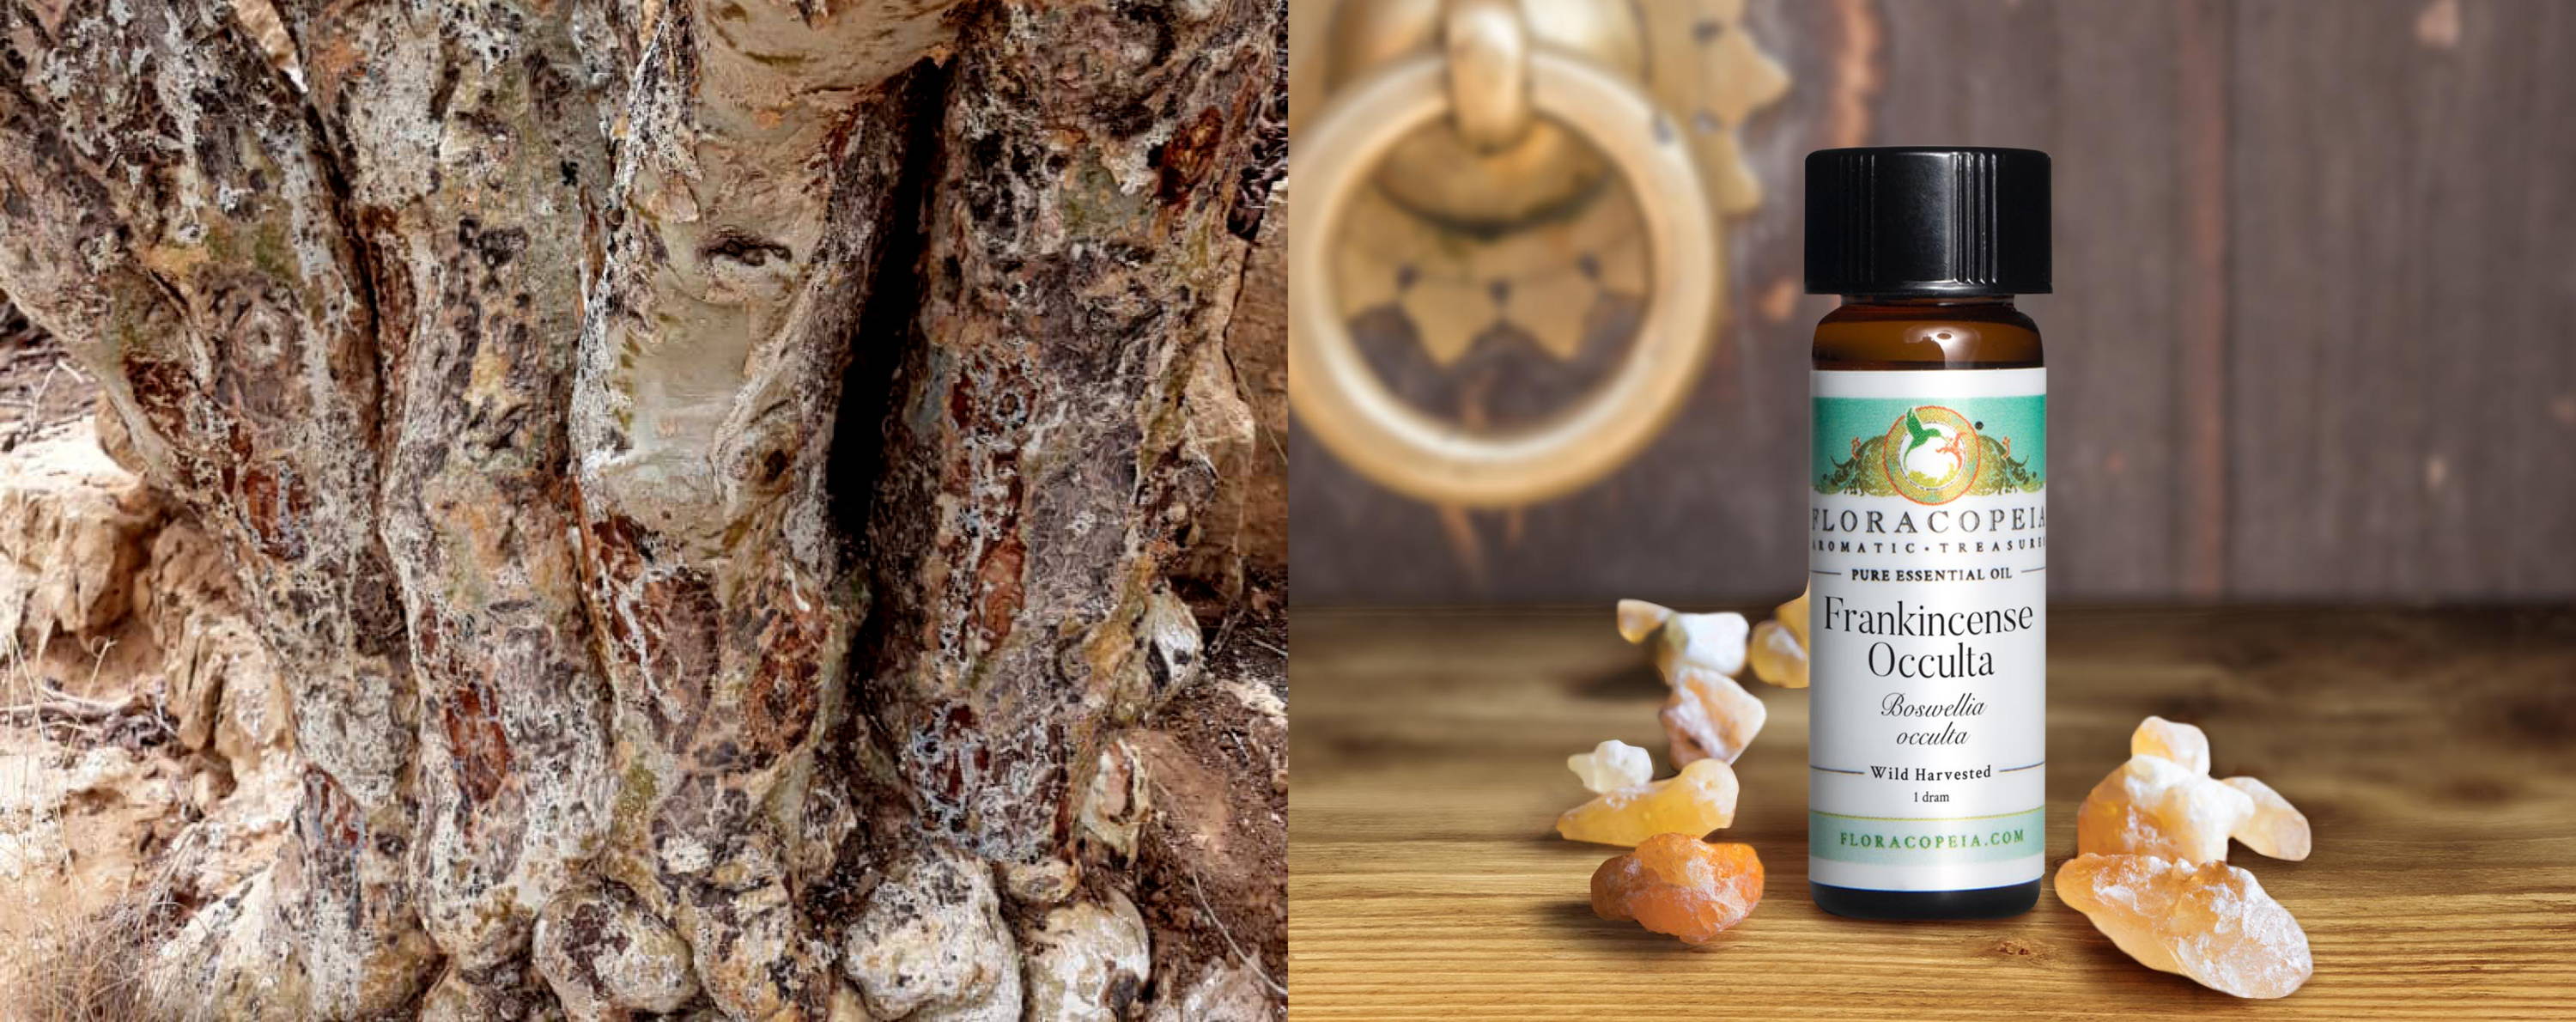 Frankincense occulta essential oil and tree bark